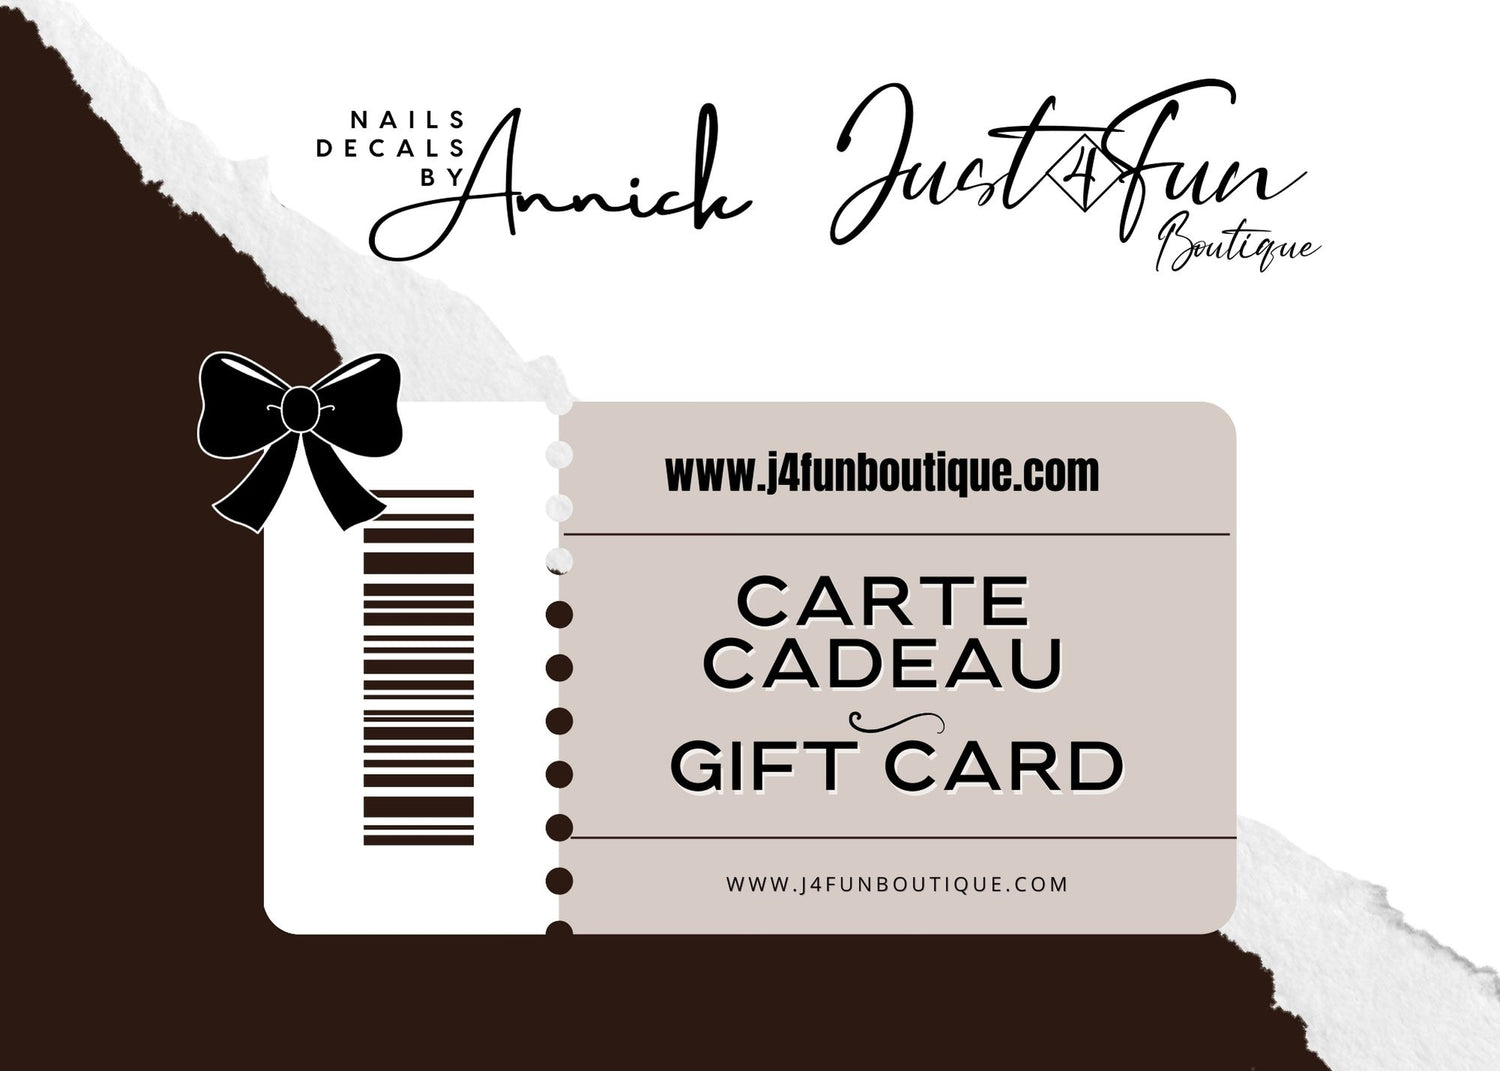 carte cadeau- gift card www.j4funboutique.com